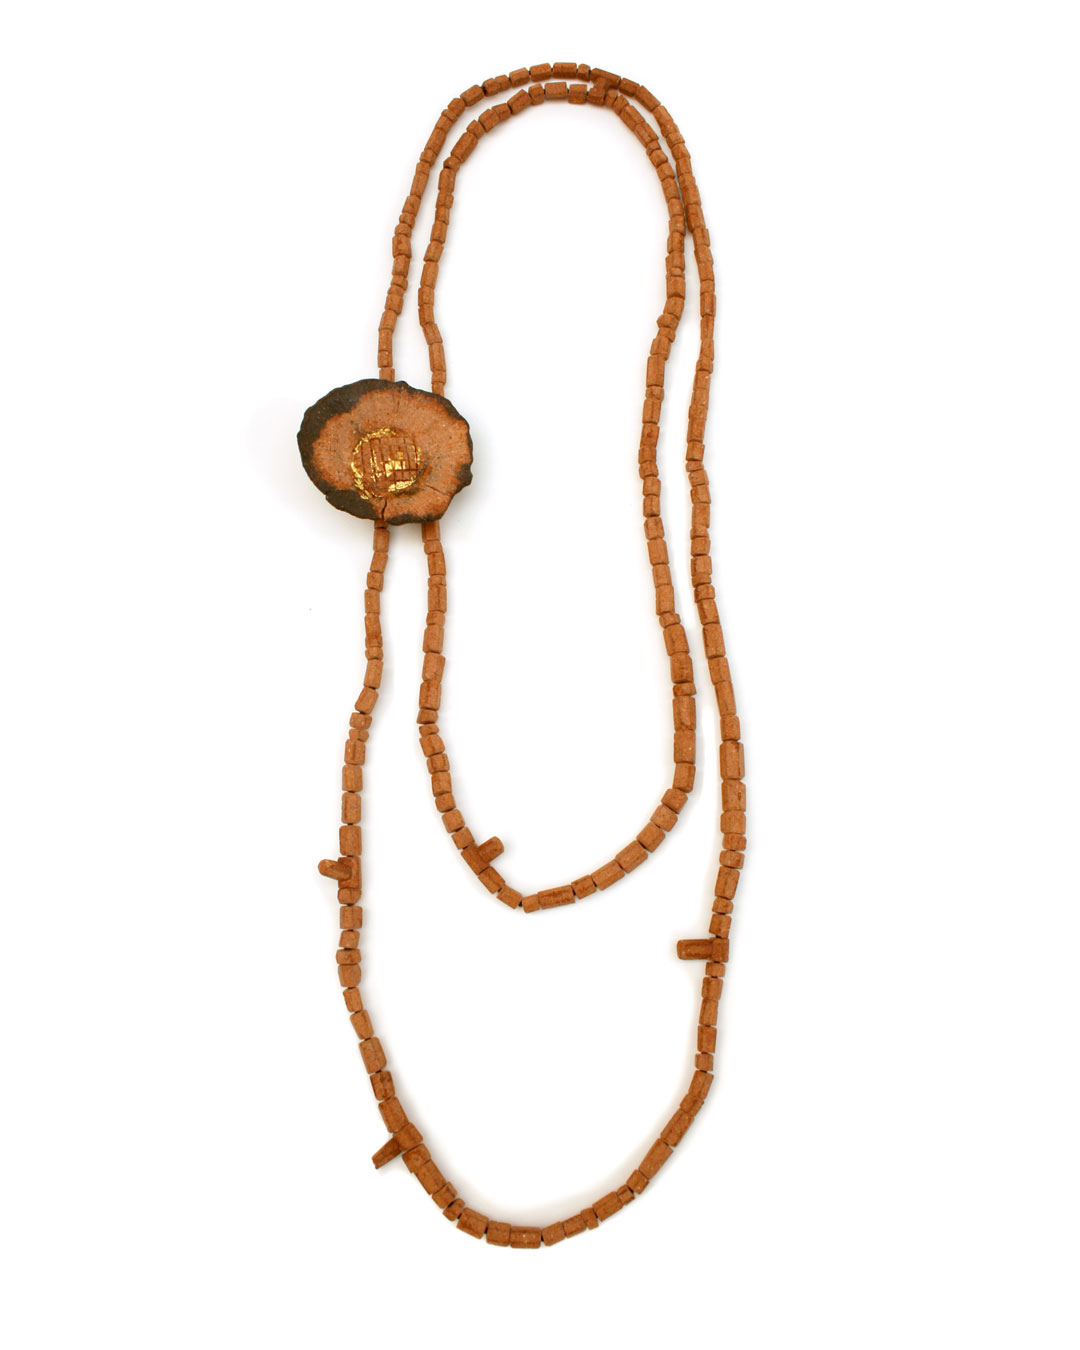 Carmen Hauser, Schnittblume (Cut Flower), 2015, necklace; soil, sand, resin, gold leaf, yarn, steel wire, 590 x 200 x 30 m, €1310